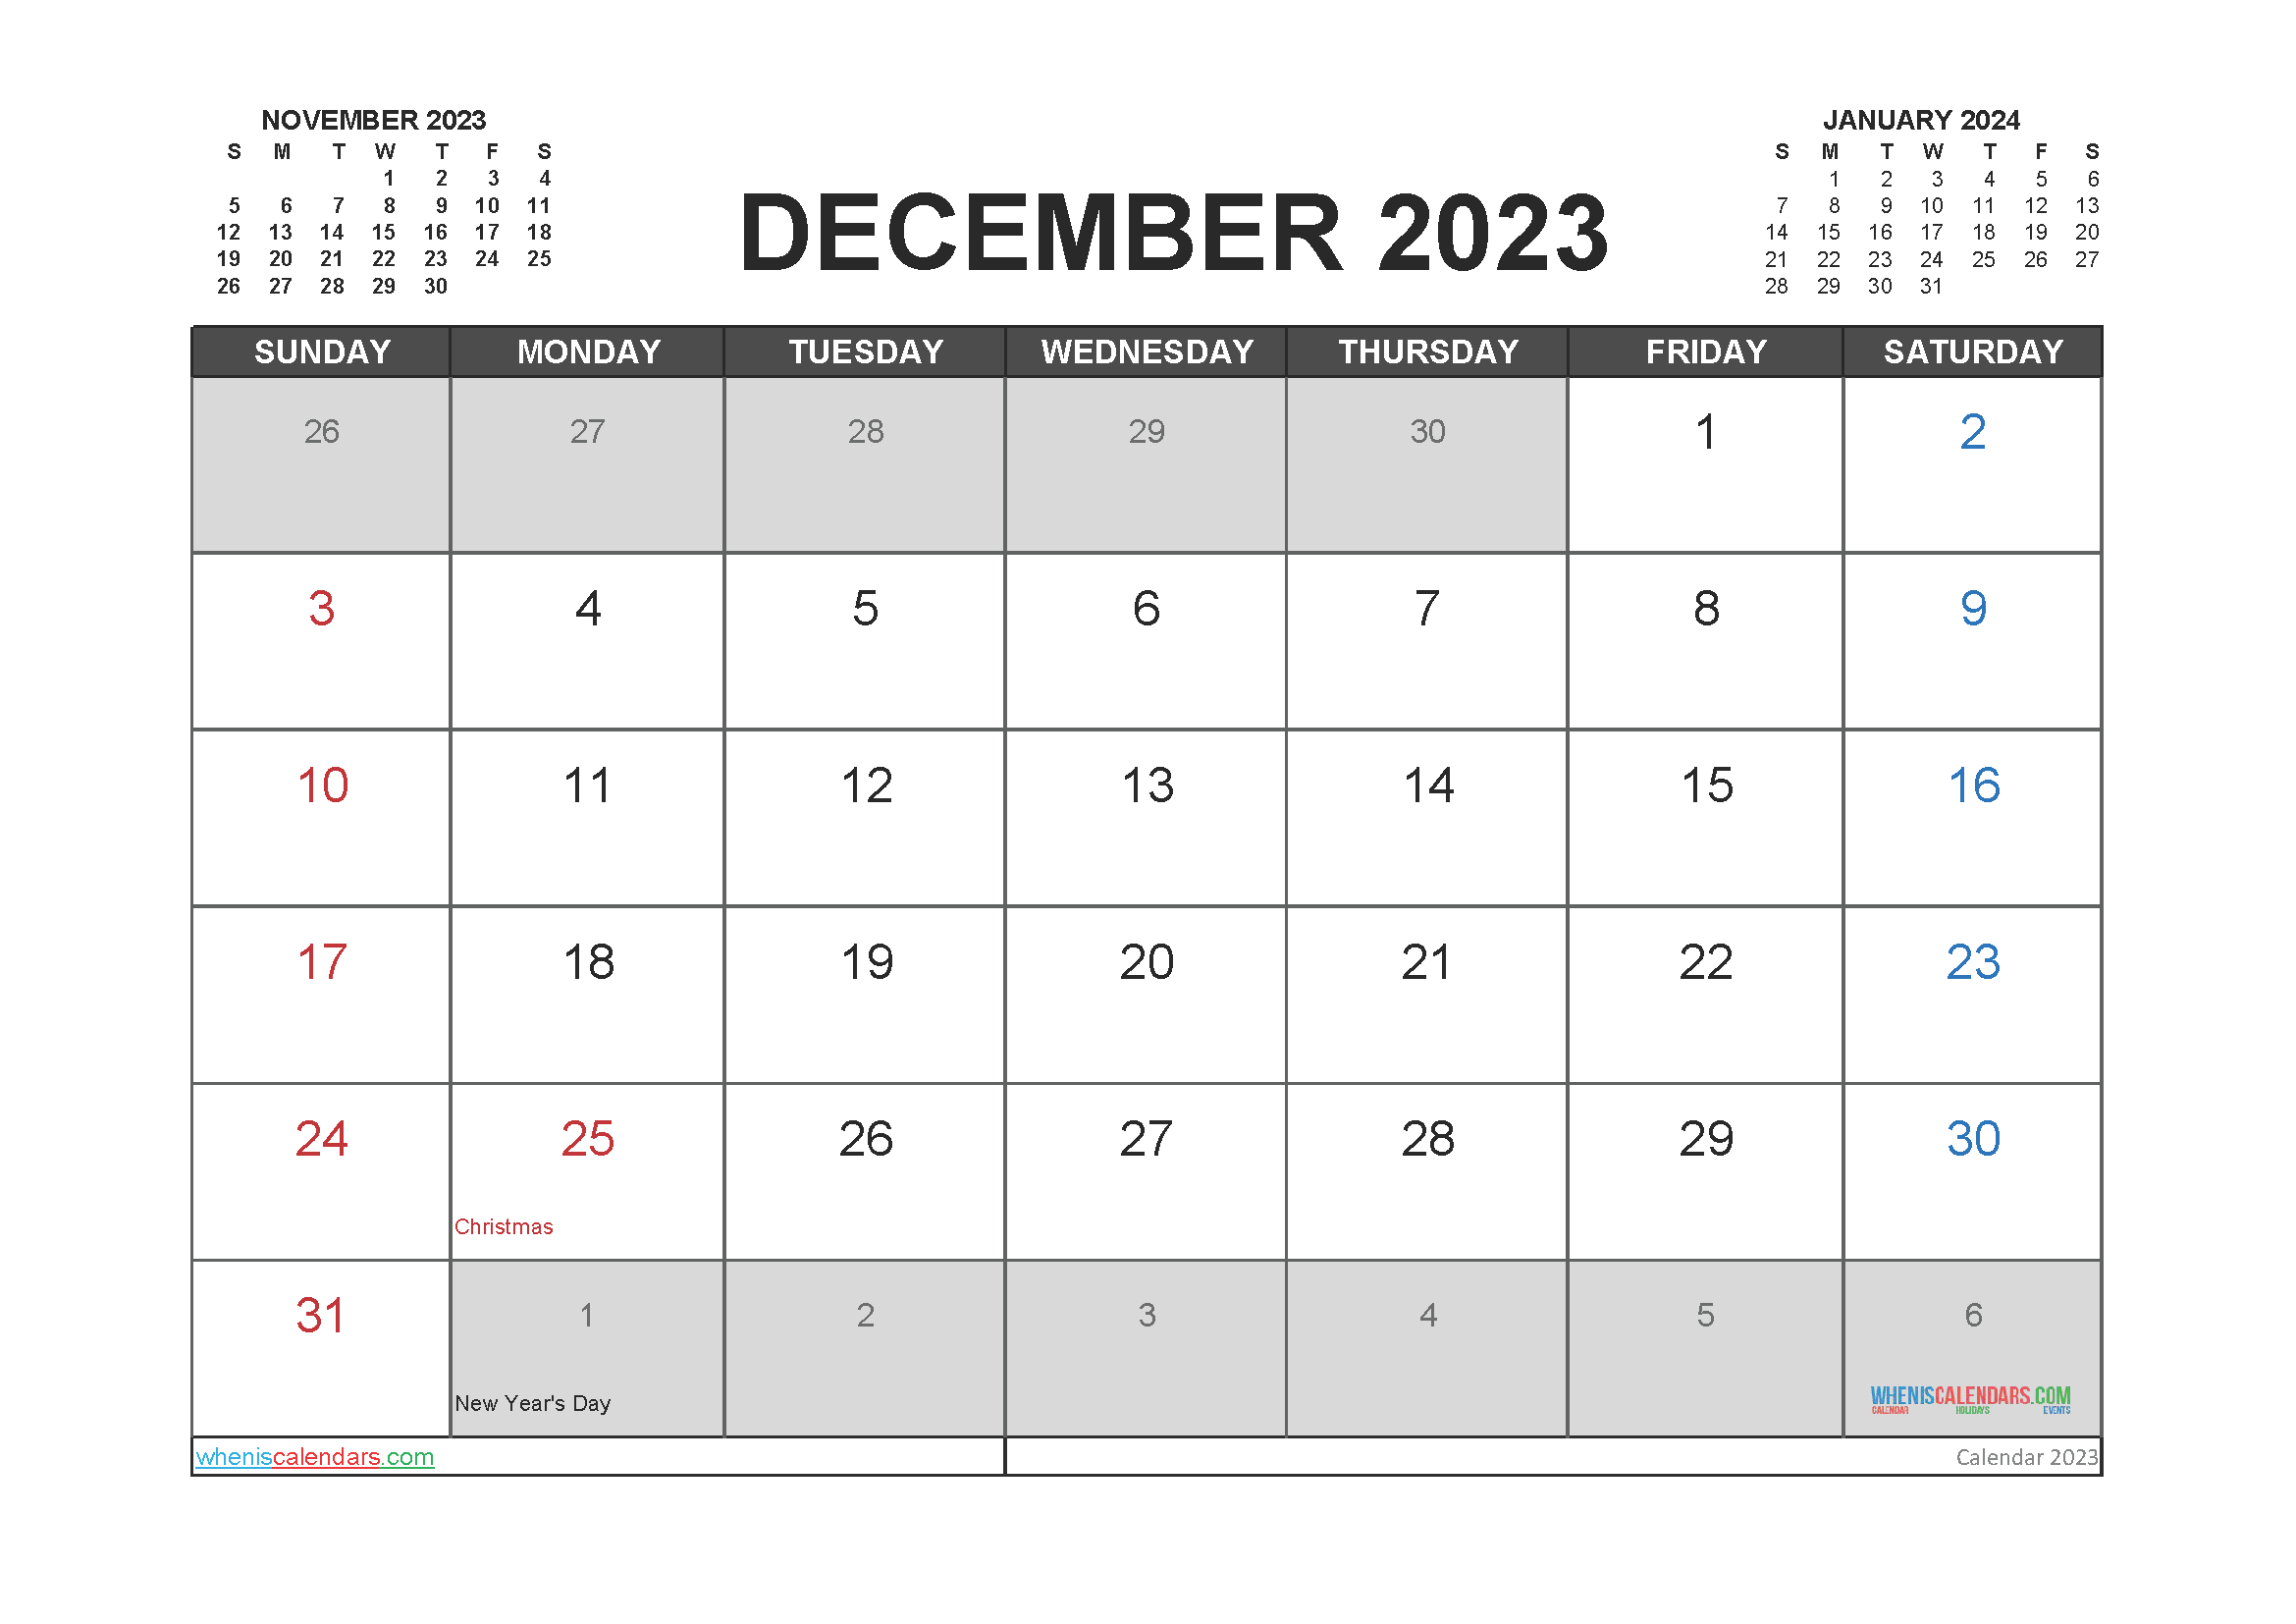 dec-2023-calendar-recette-2023